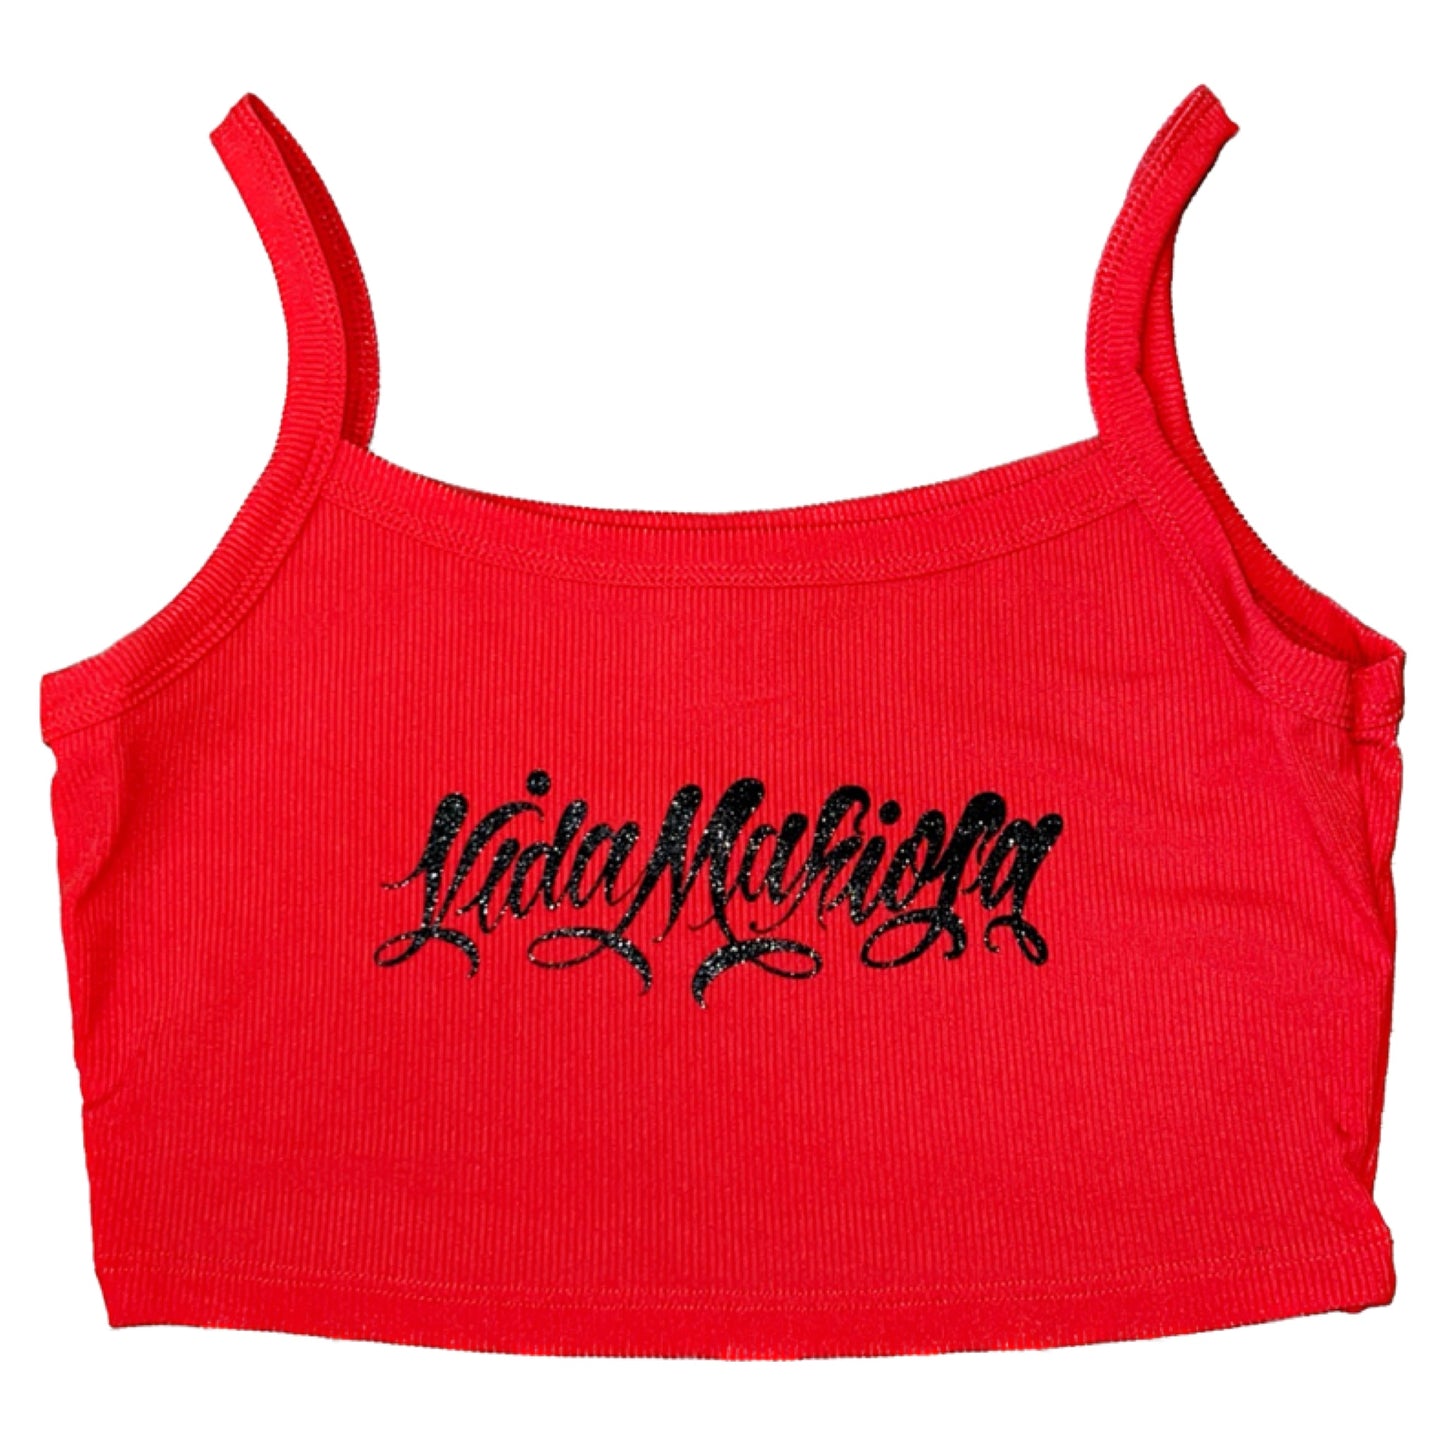 Limited Edition Women's Glitter Vida Mafiosa Red Crop Top